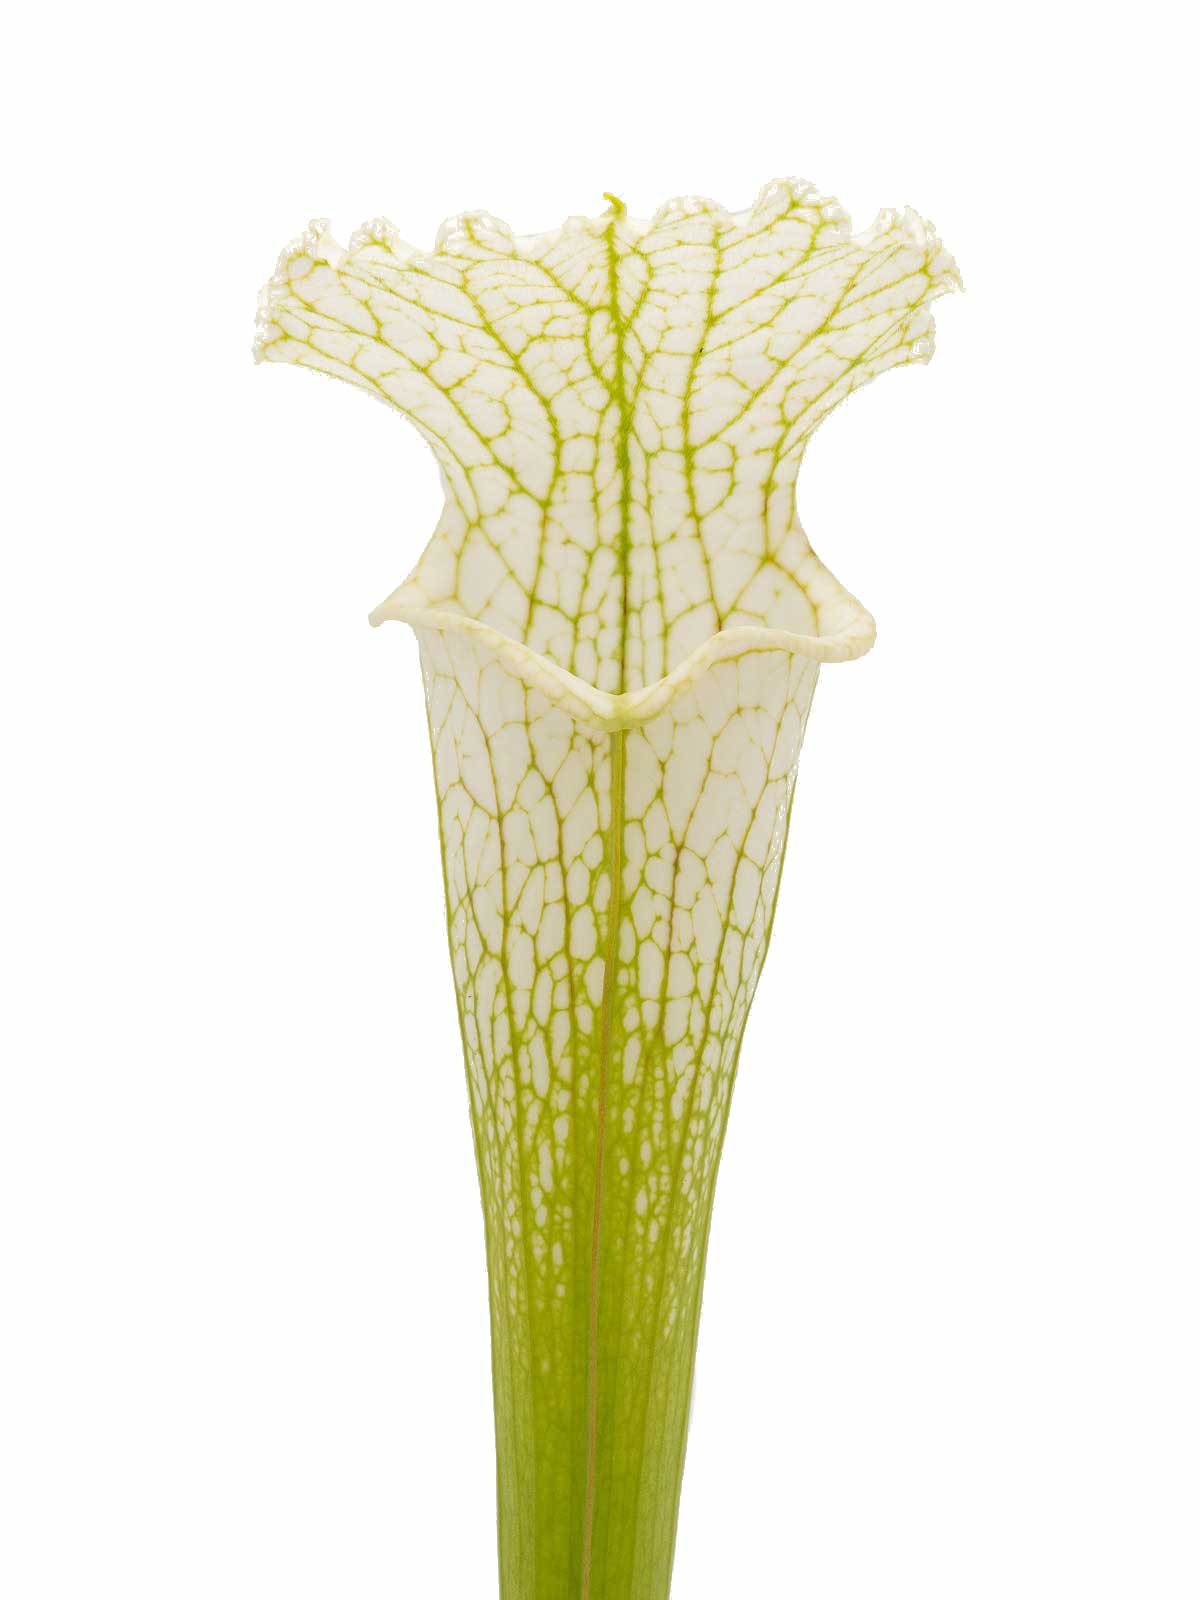 Sarracenia leucophylla - MK L04, `Schnells Ghost´, yellow flowered form